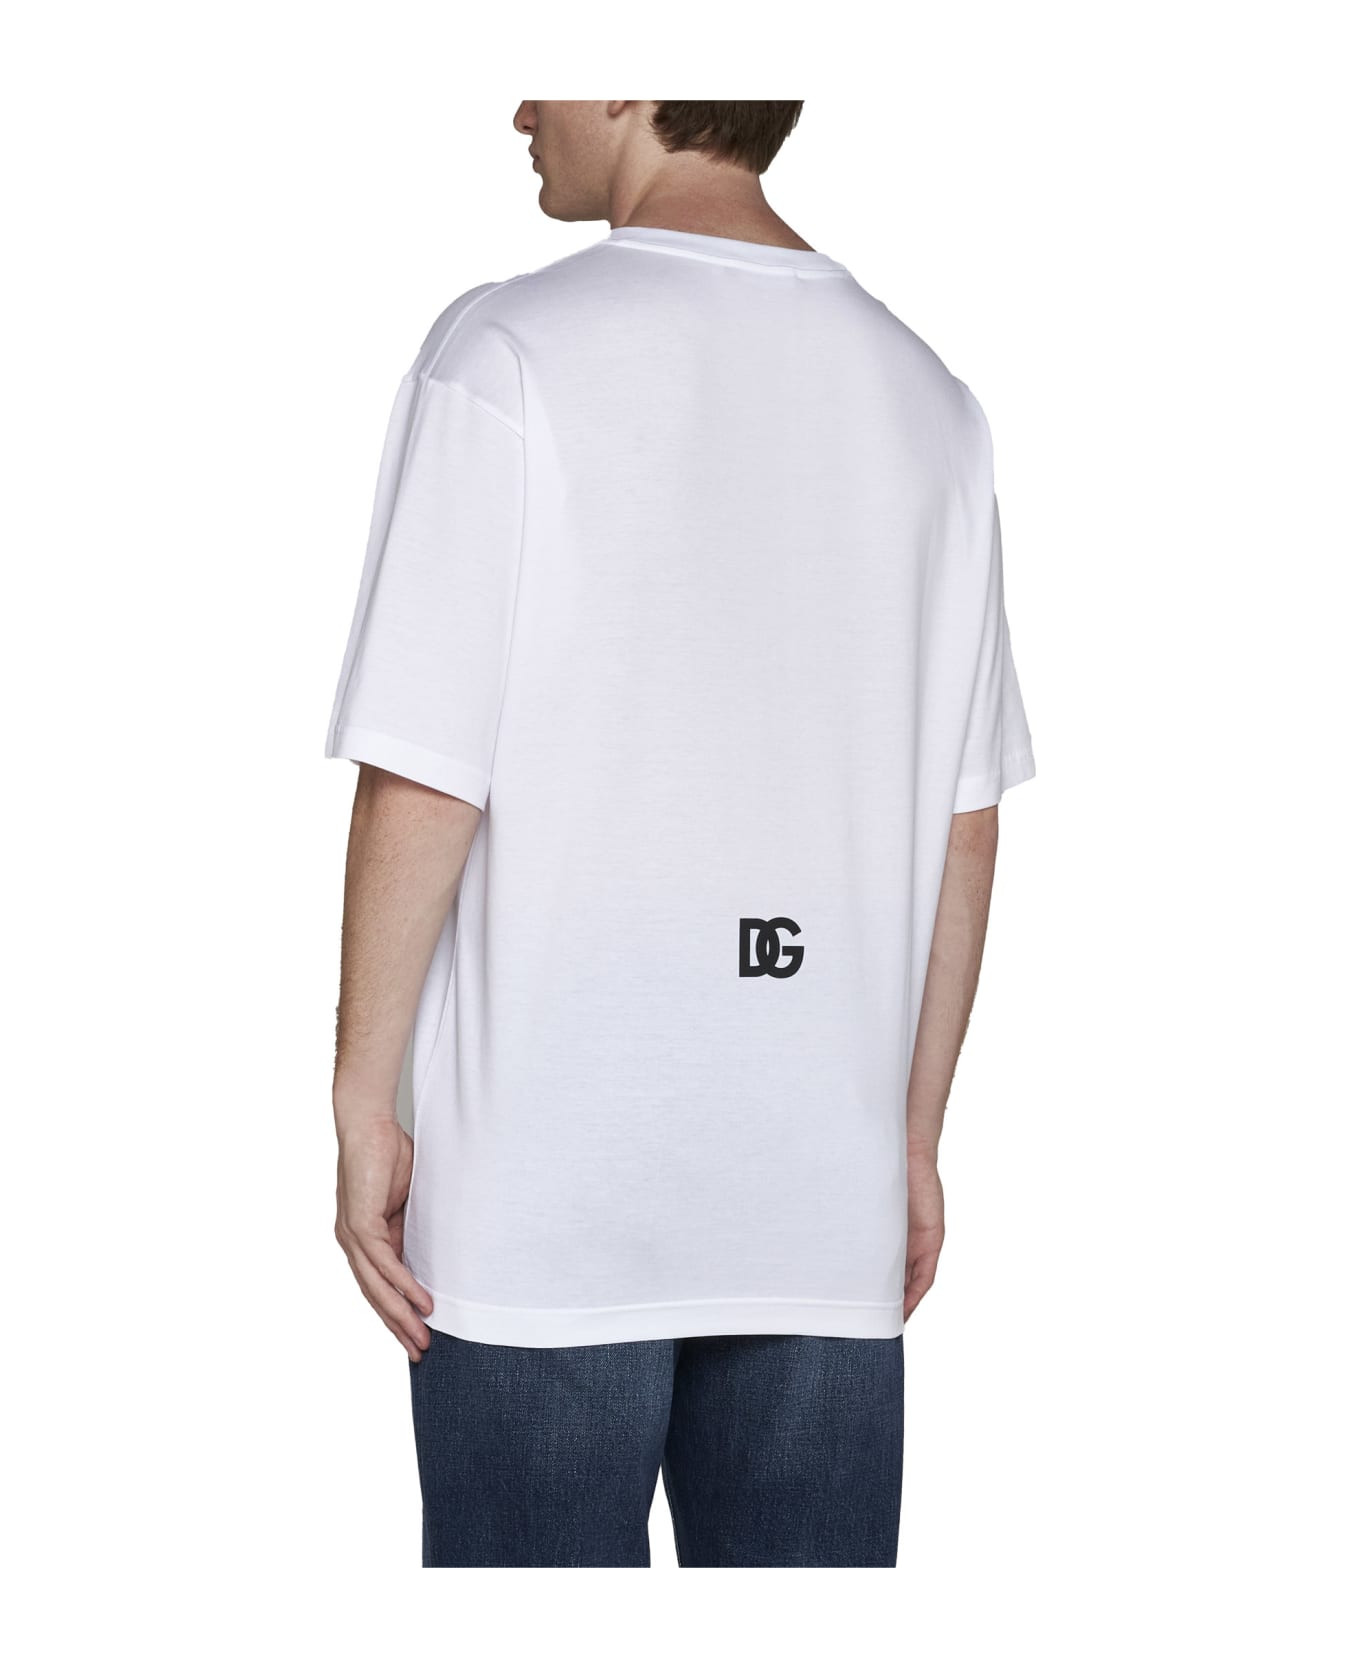 Dolce & Gabbana Dg Logo T-shirt - White シャツ